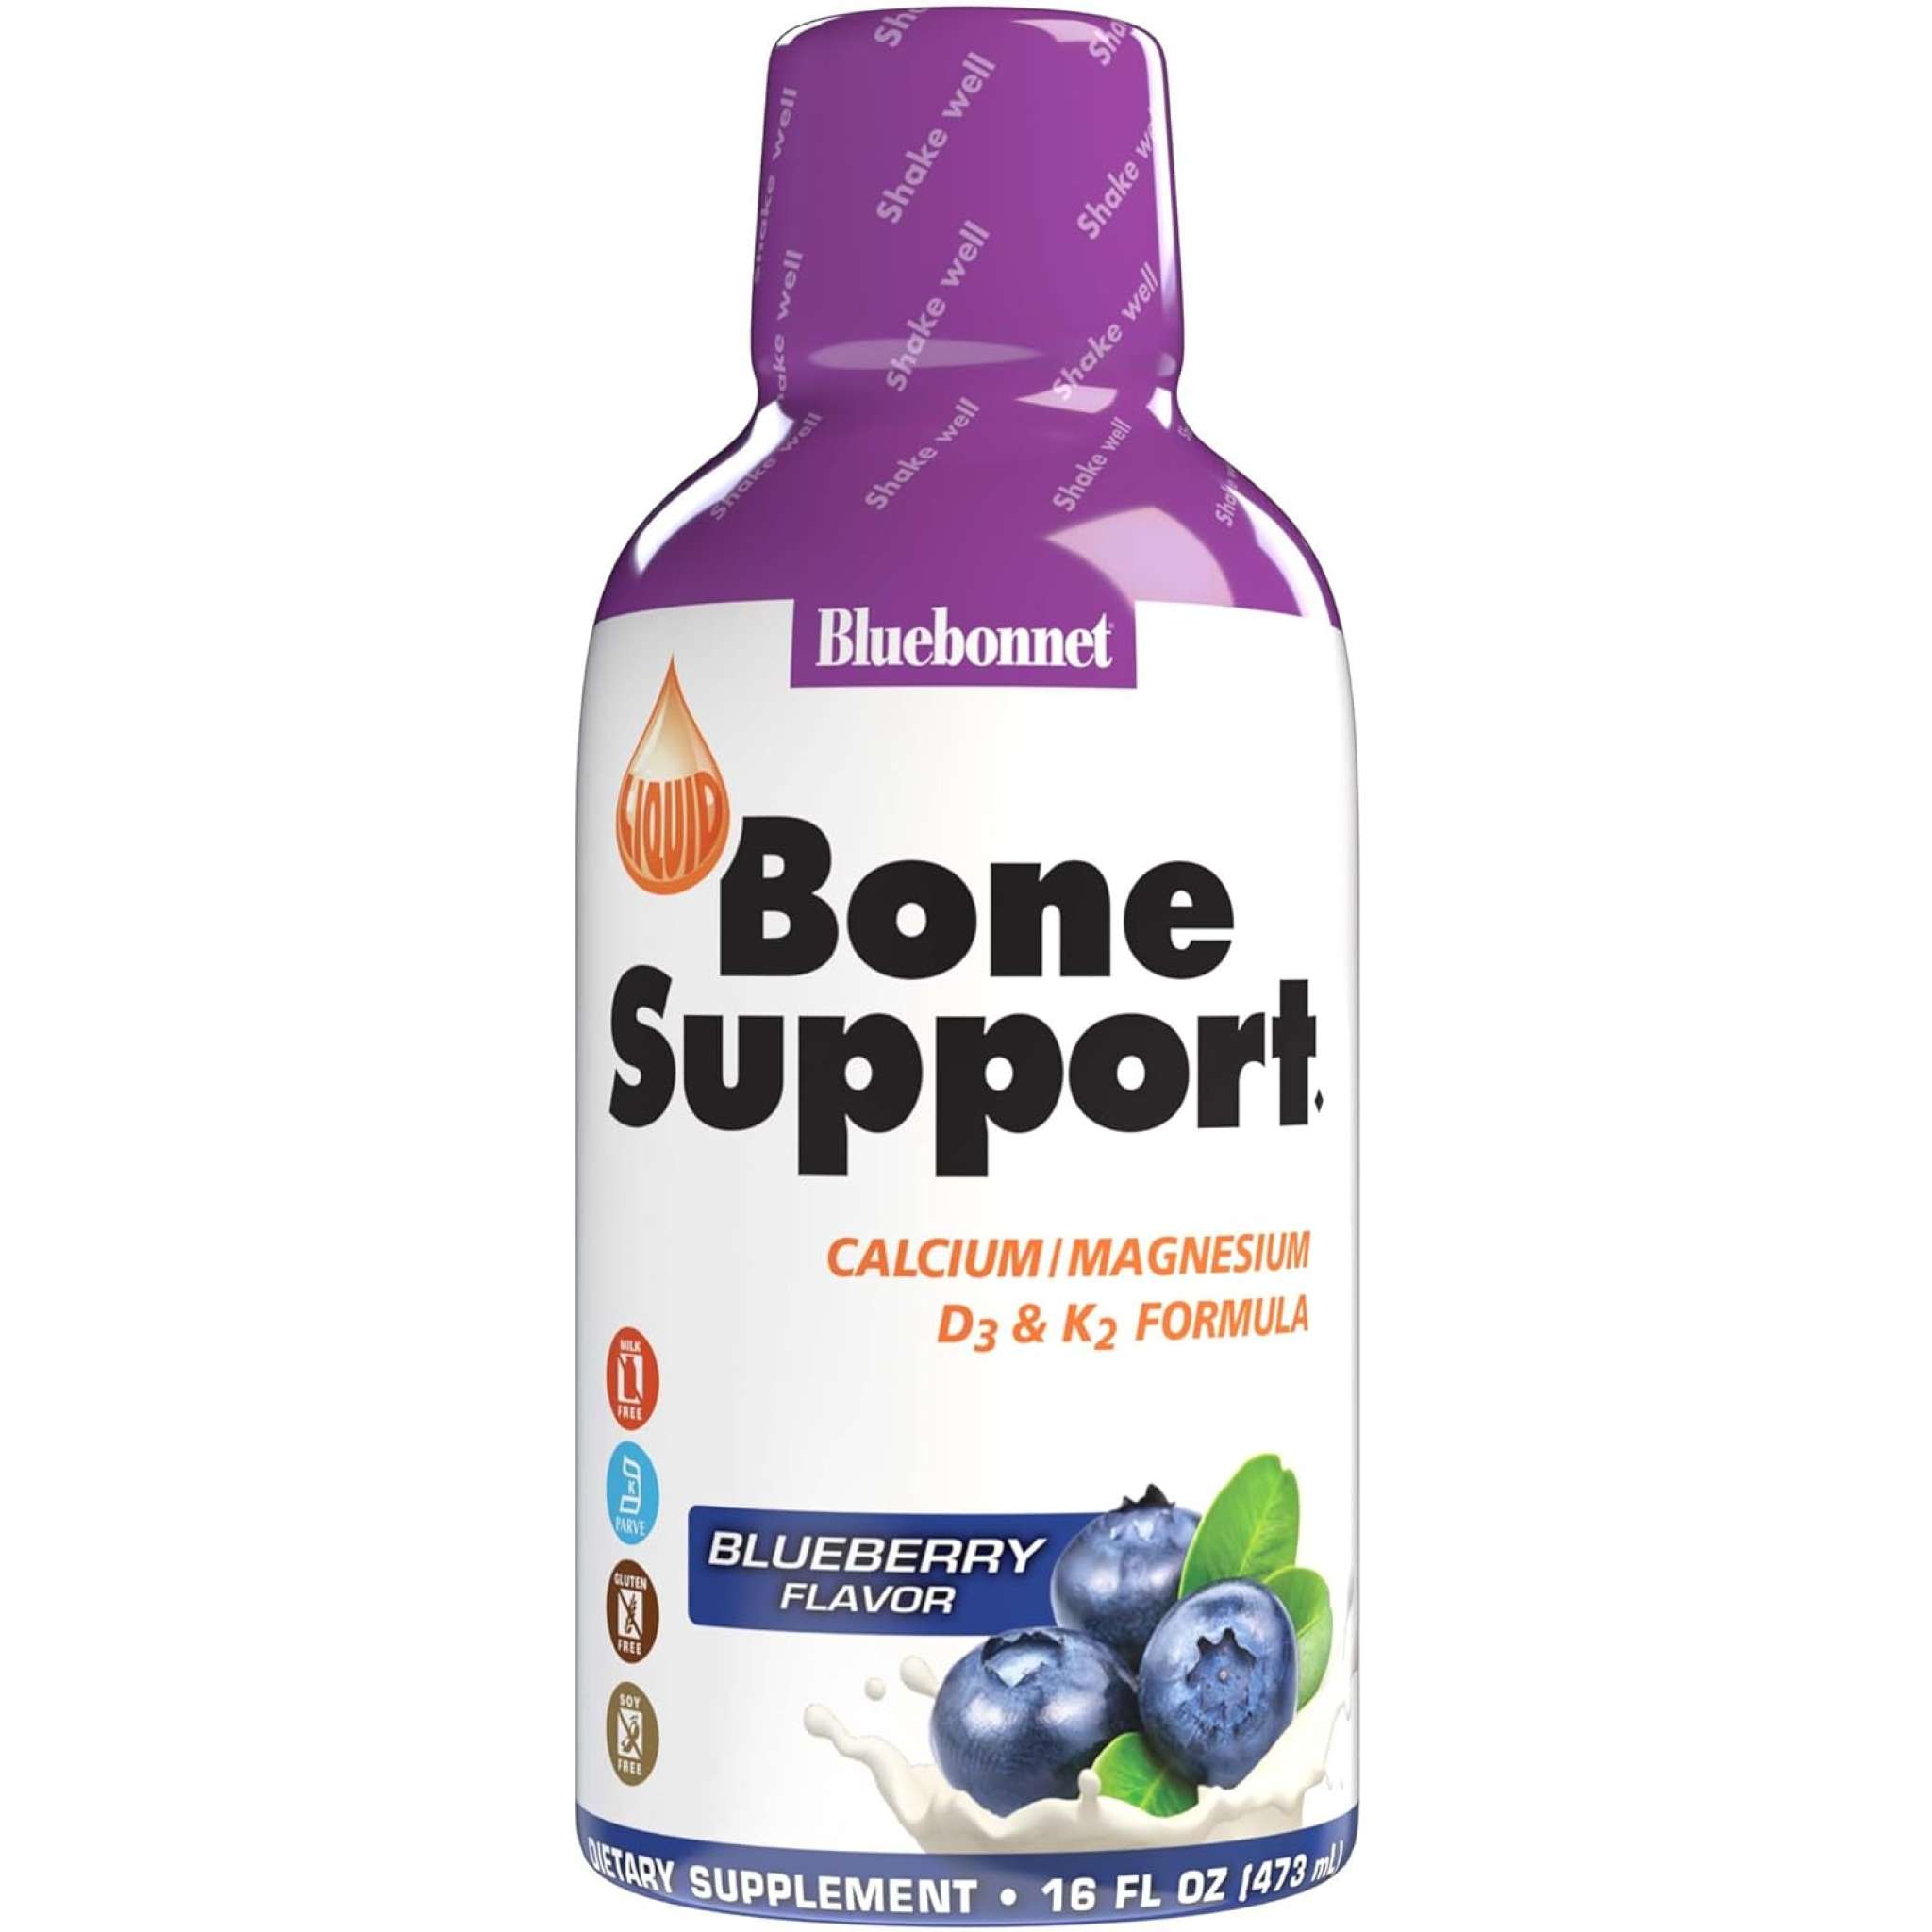 Bluebonnet - Bone Support liq Blueb